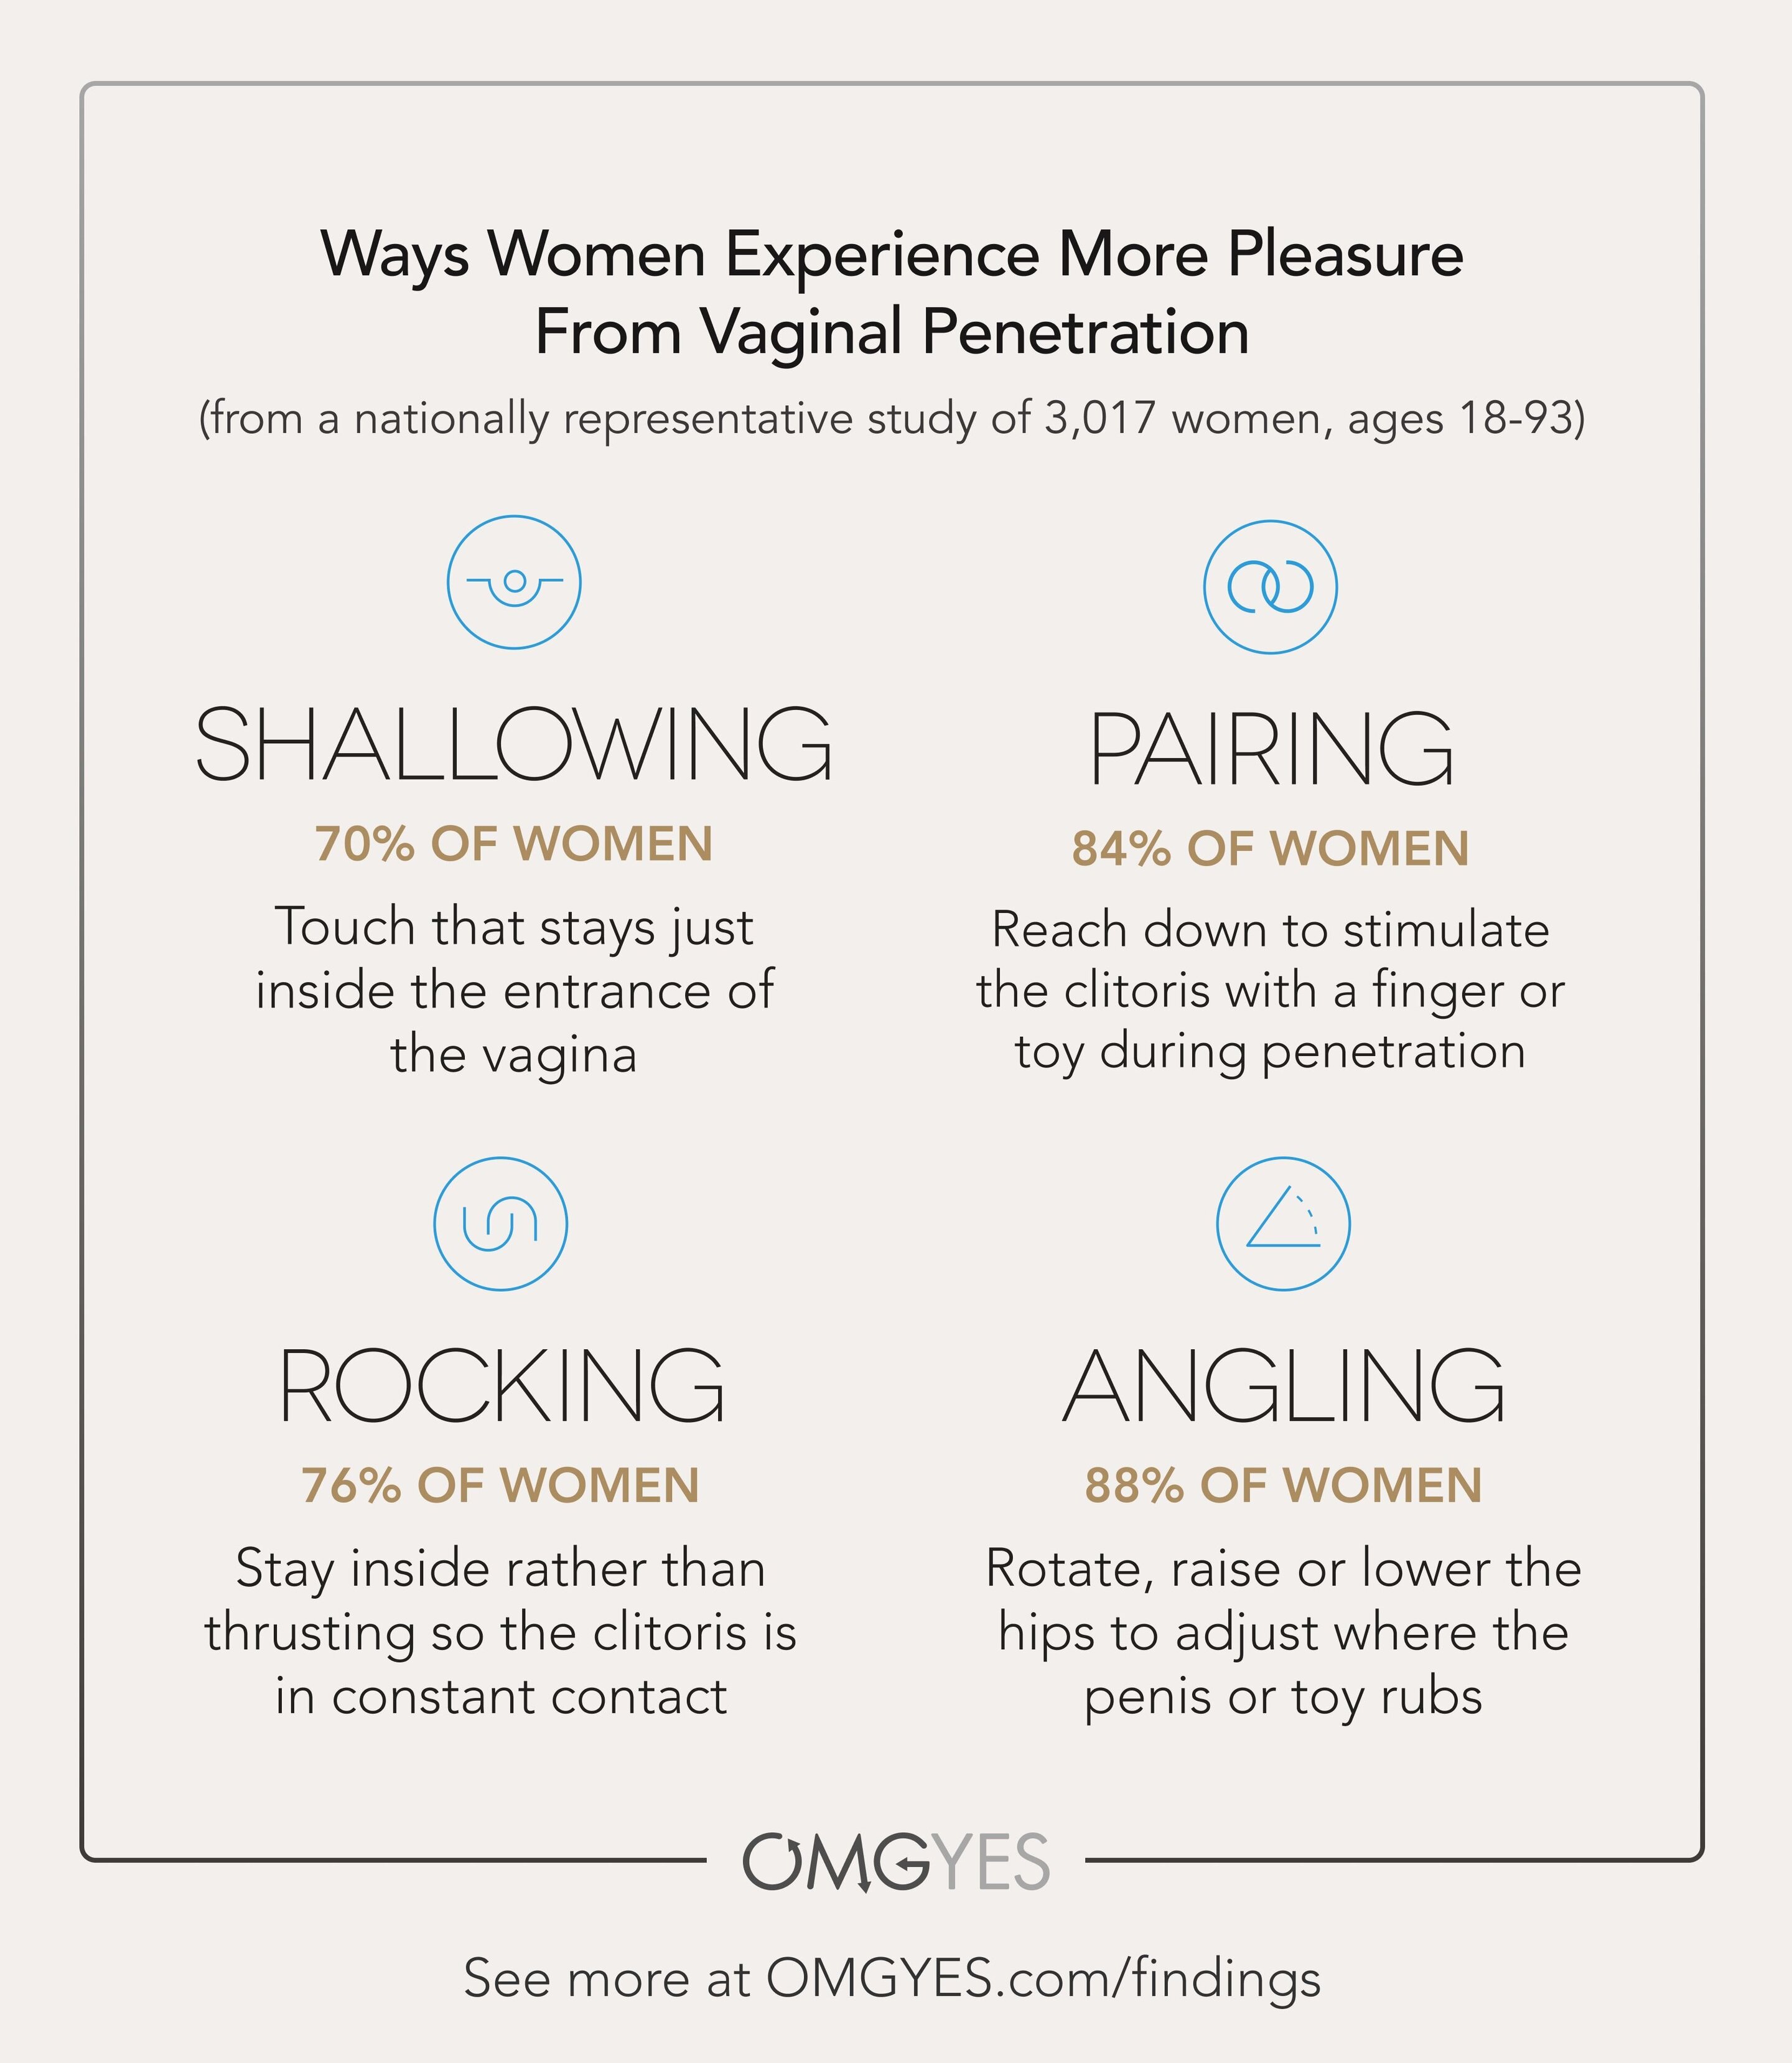 Women describe specific techniques to increase their own pleasure